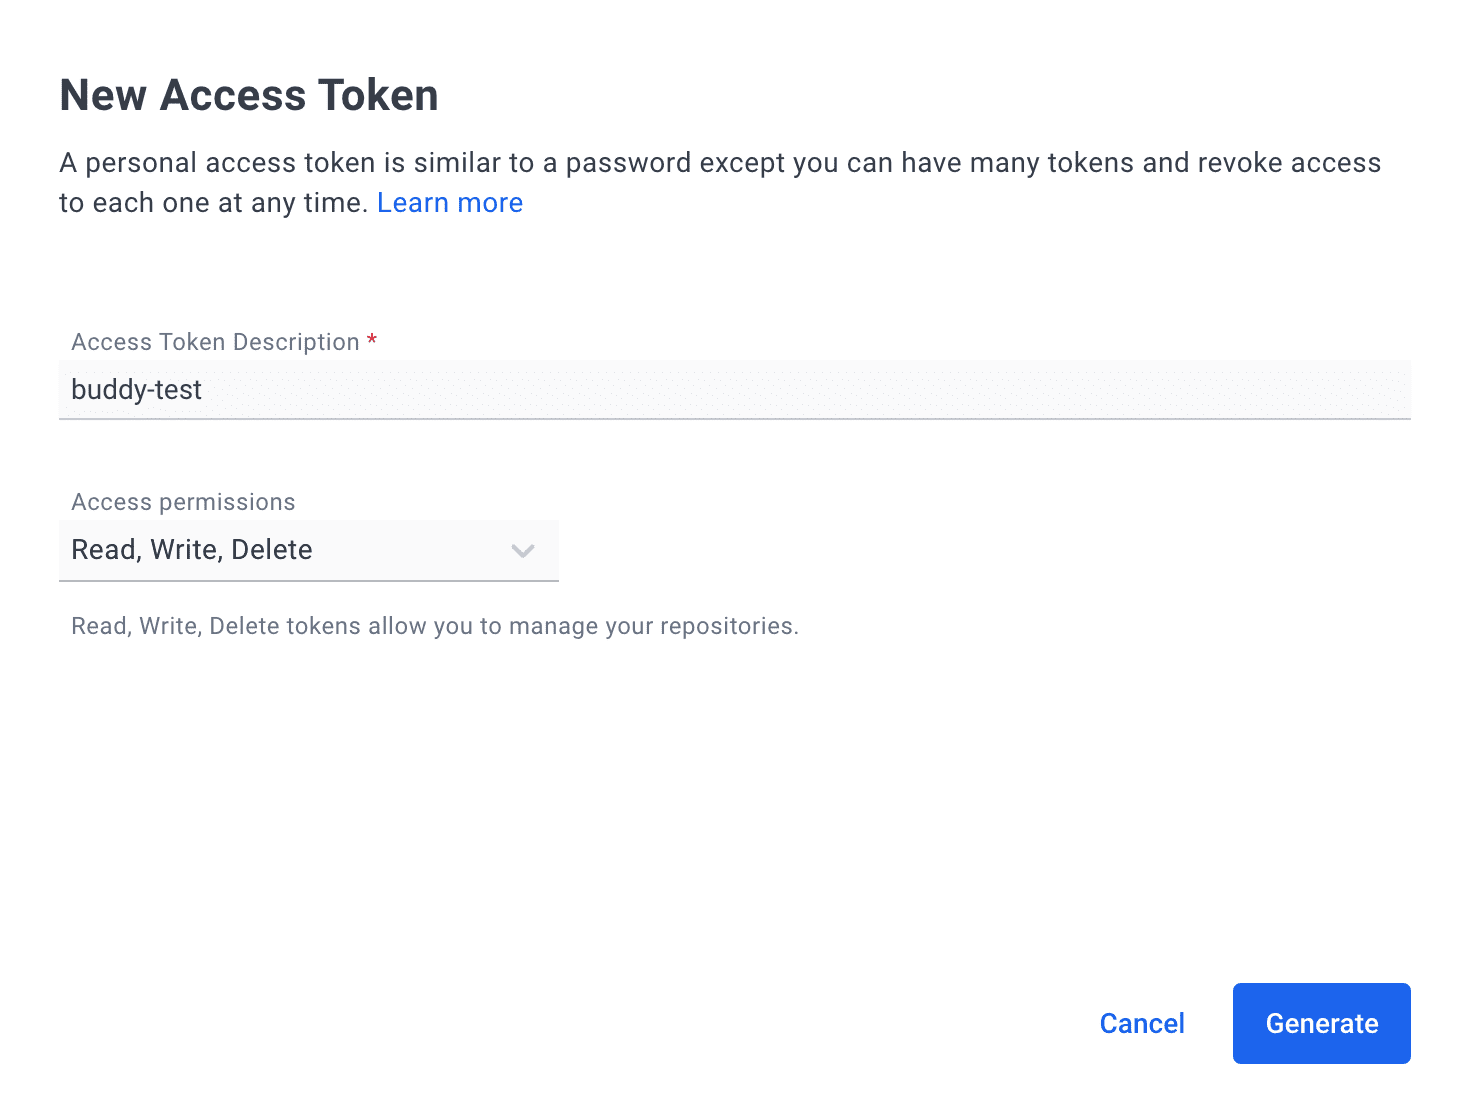 Generating access token